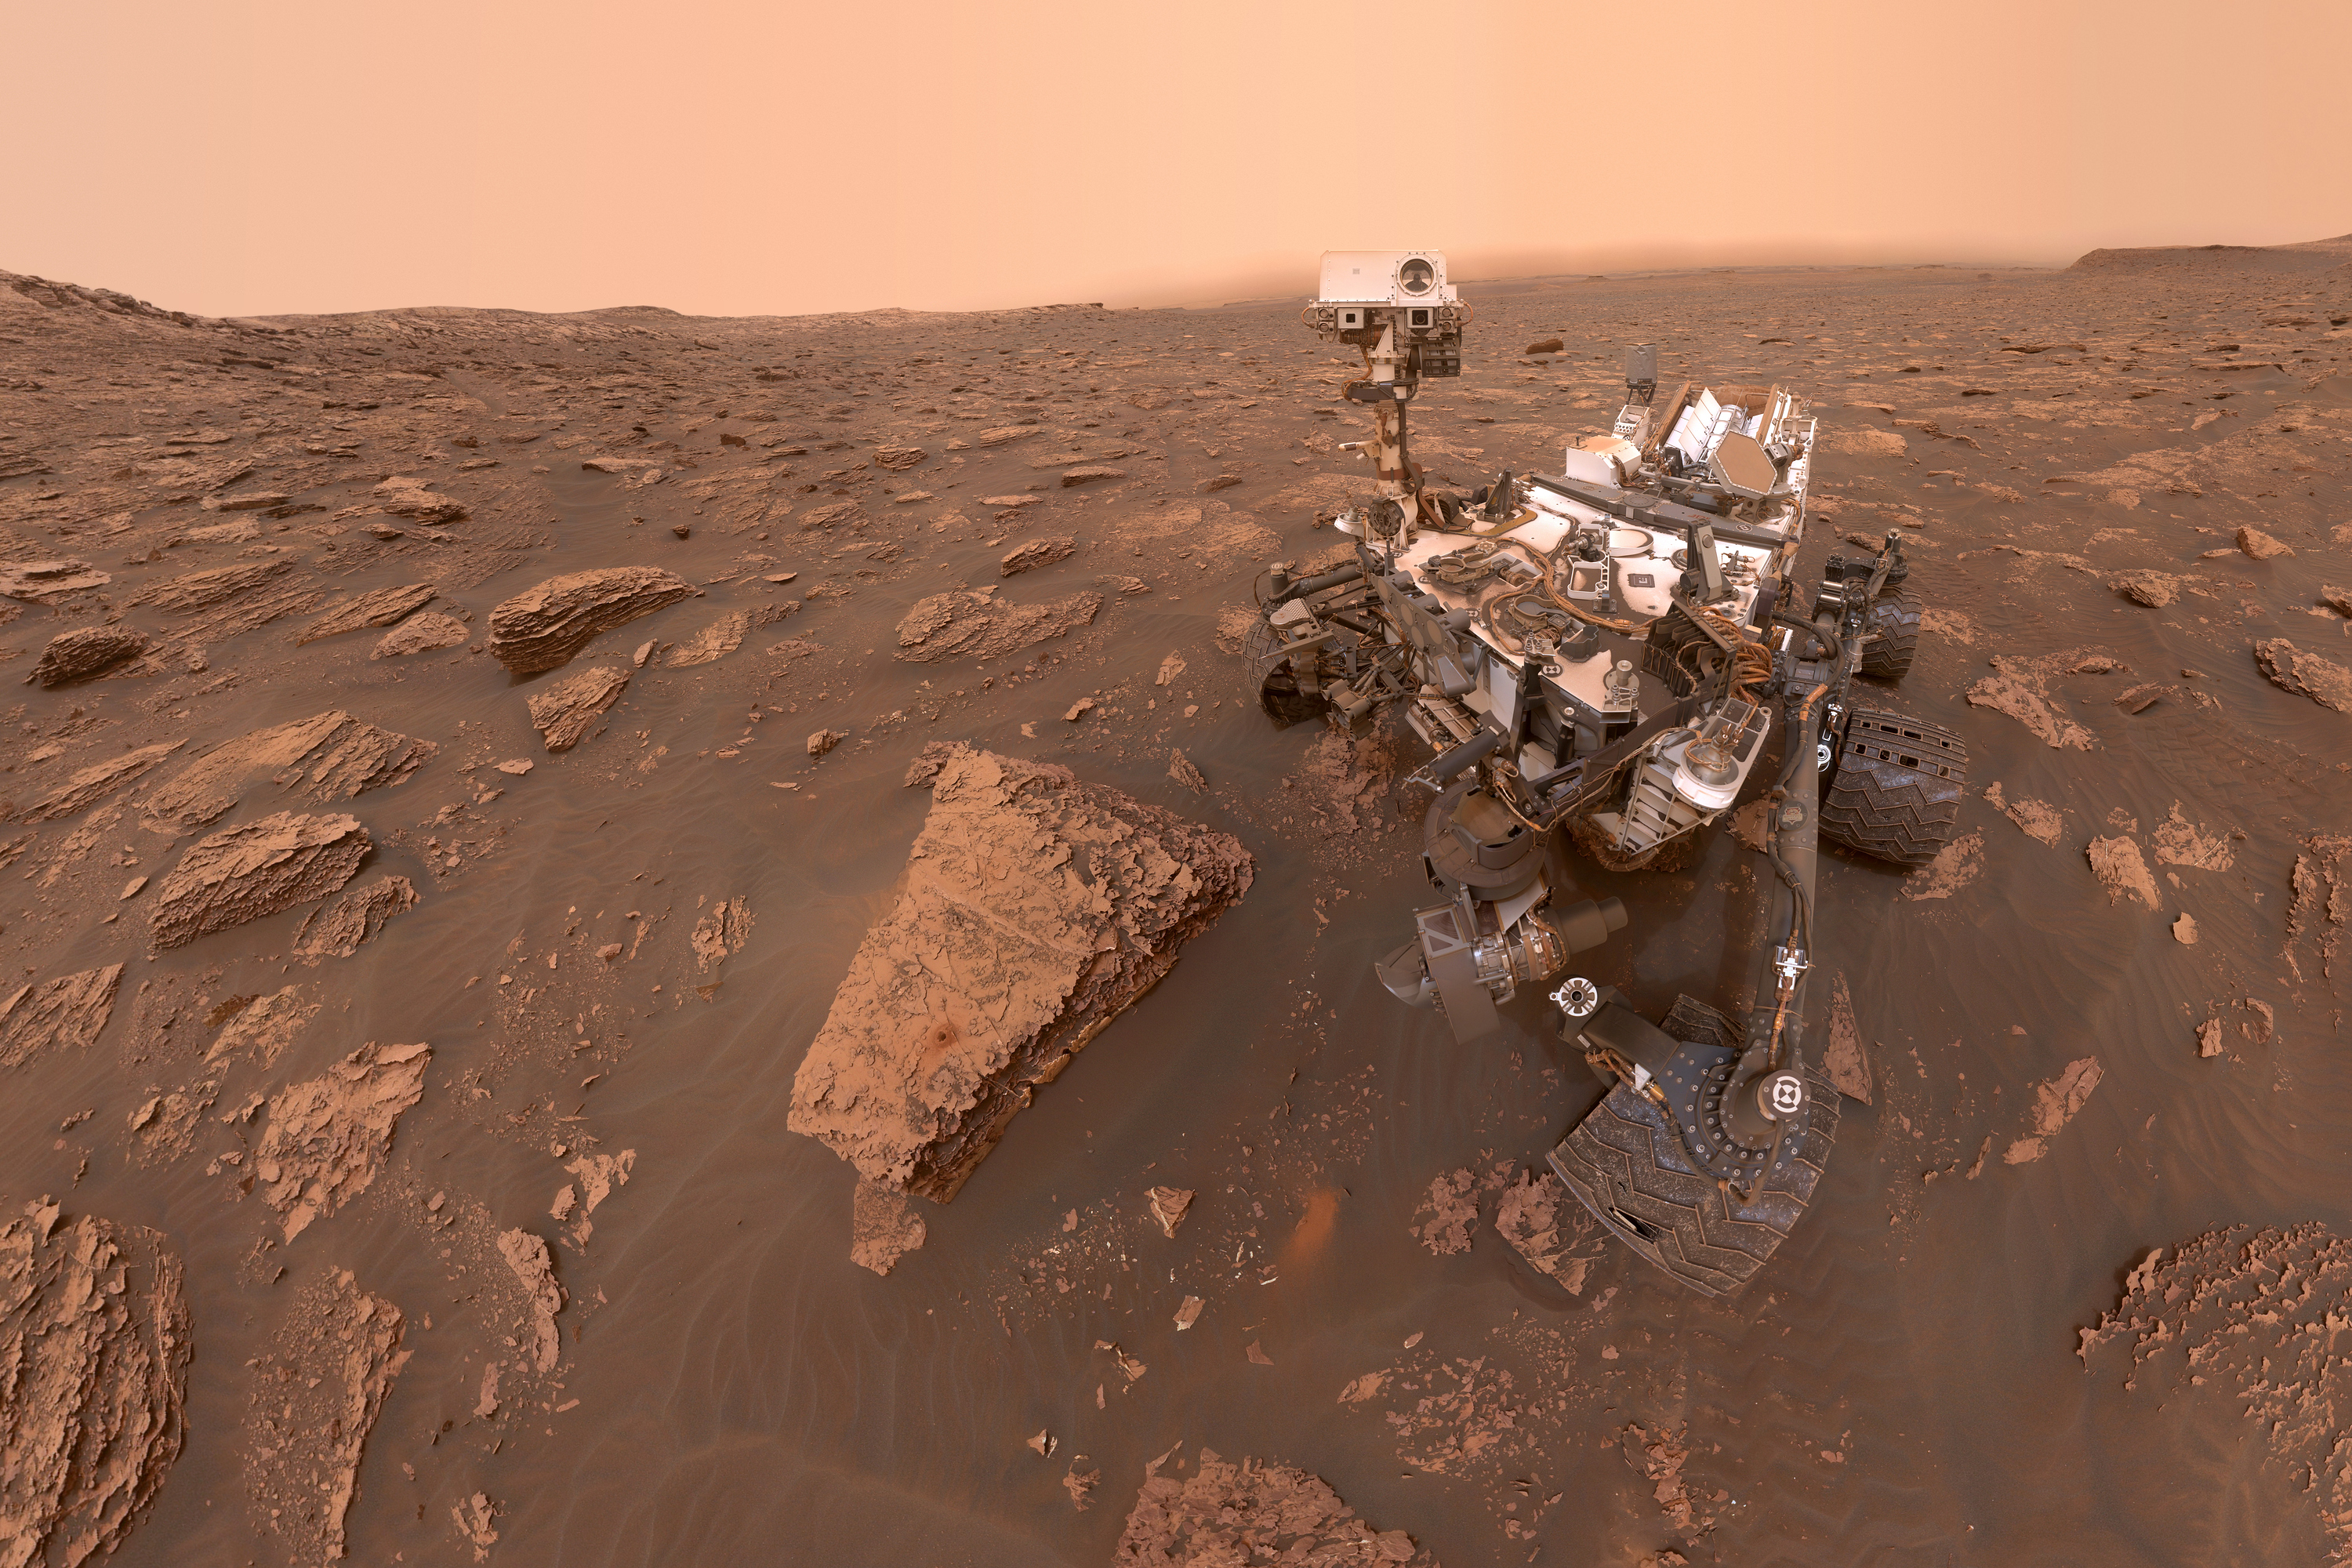 NASA Curiosity Mars rover selfie

Sol 2082